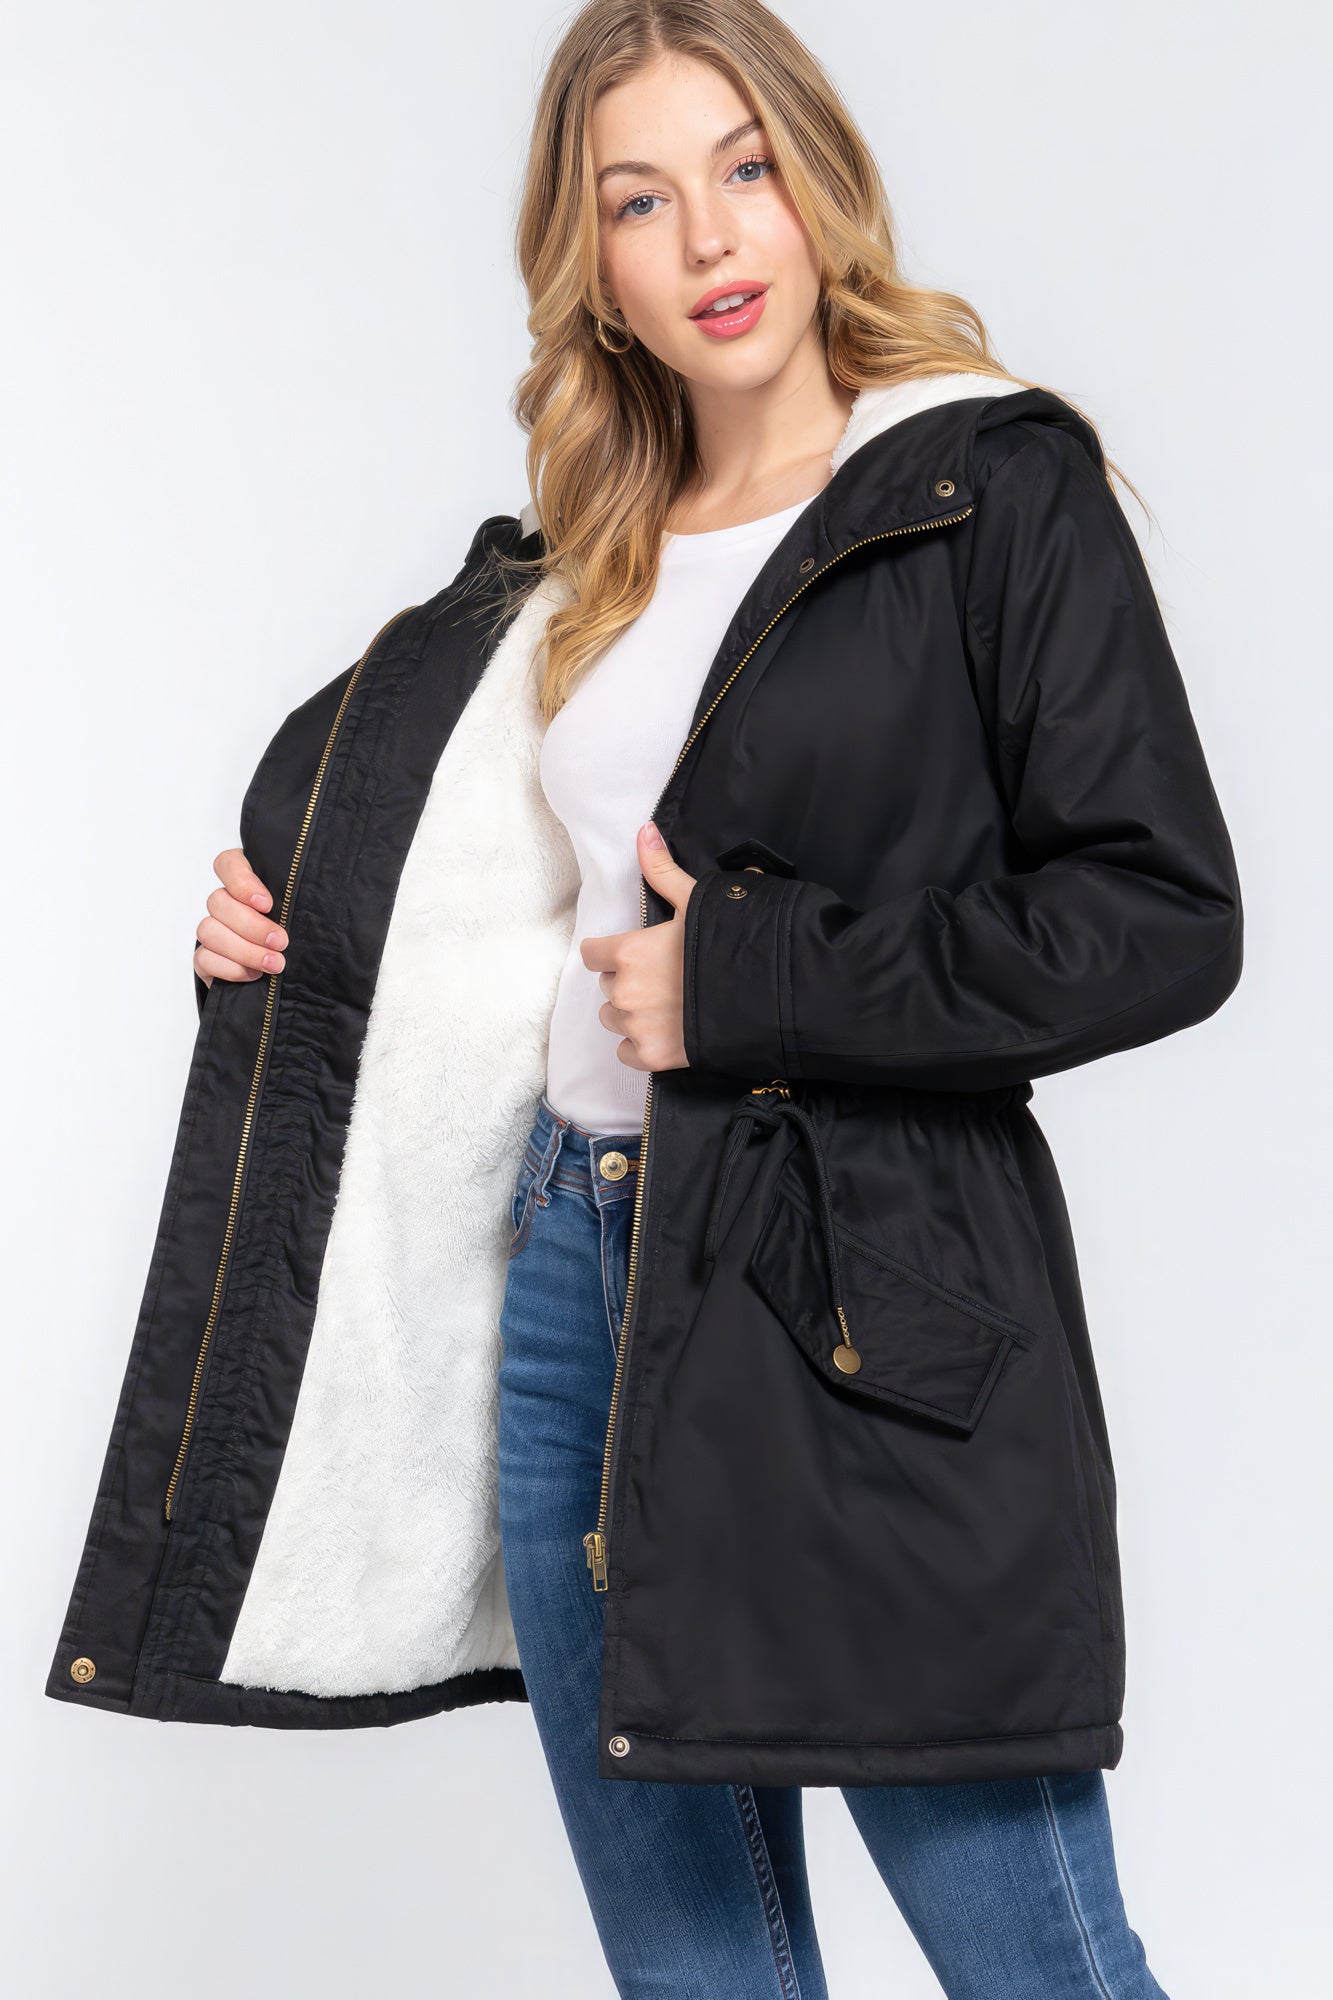 THE FARA Fleece Lined Fur Hoodie Utility Jacket